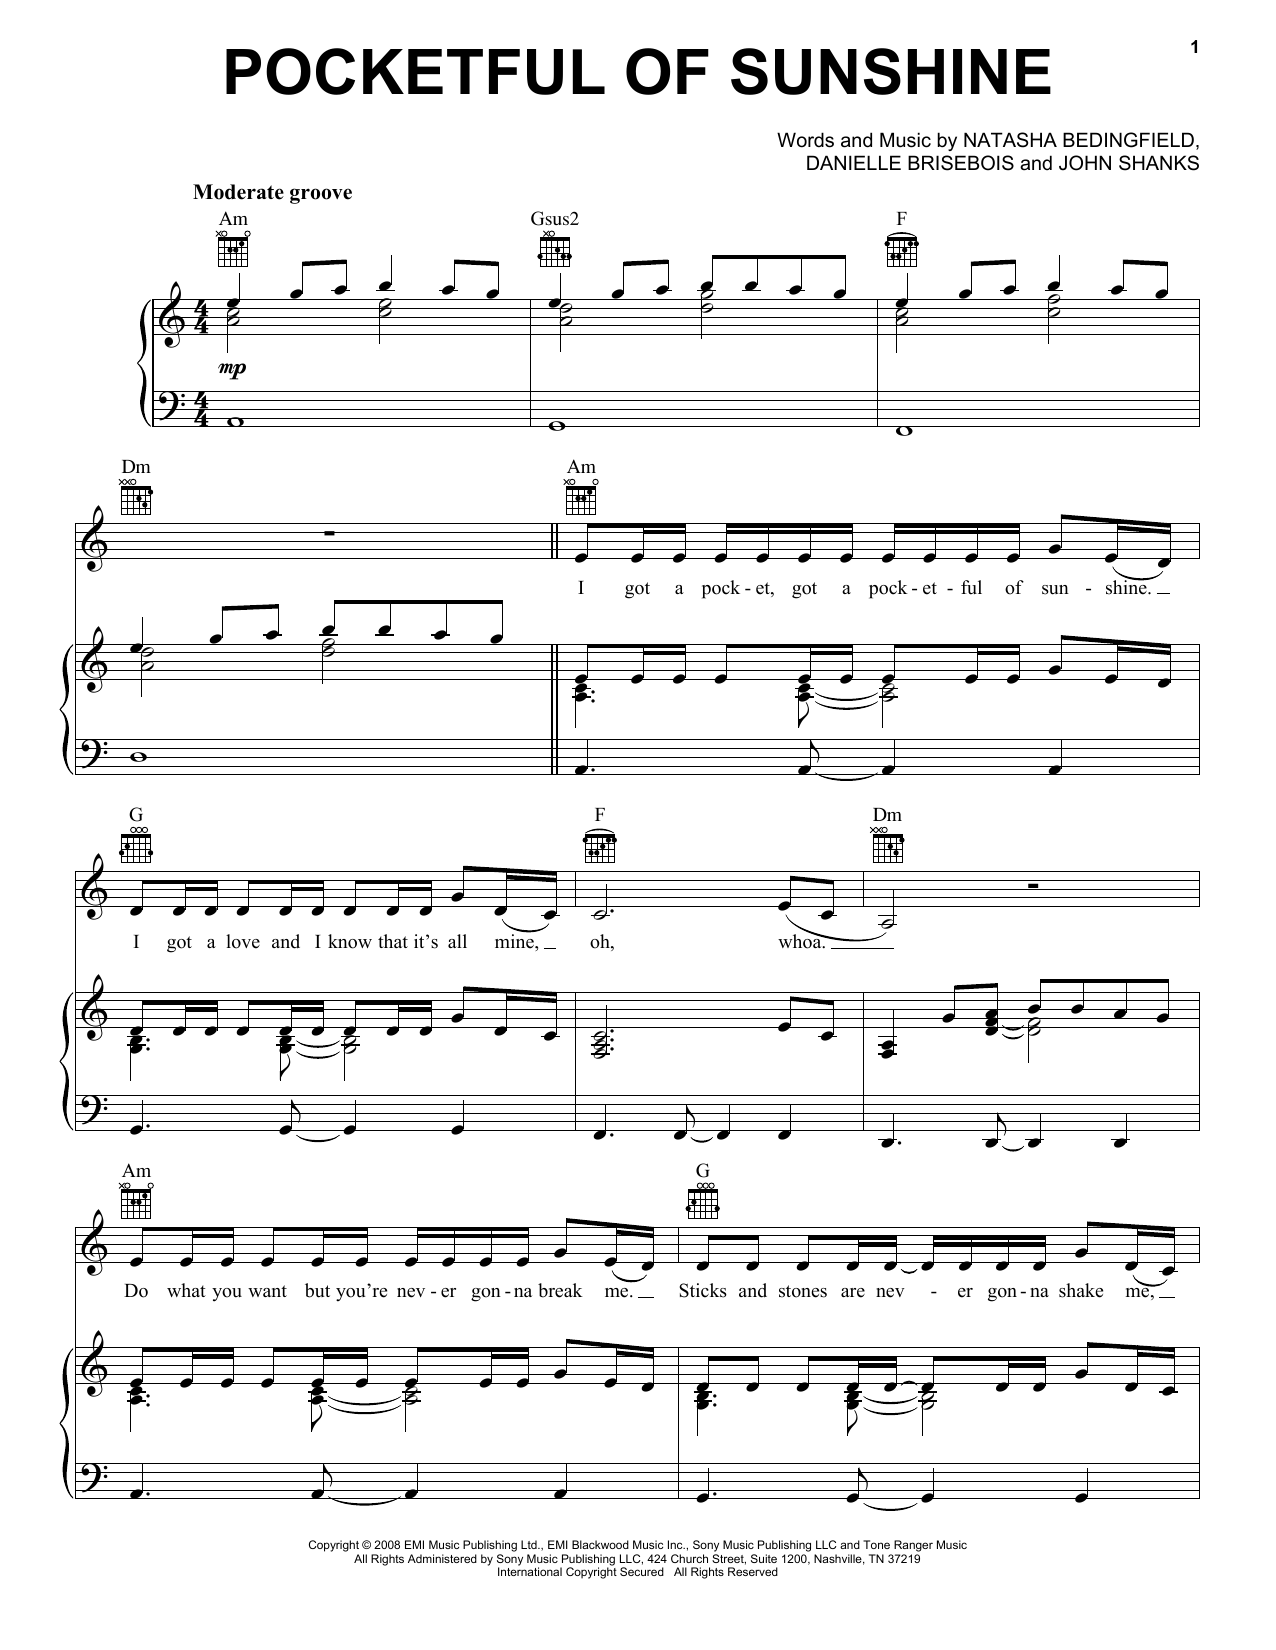 Natasha Bedingfield Pocketful Of Sunshine Sheet Music Notes & Chords for Easy Guitar Tab - Download or Print PDF